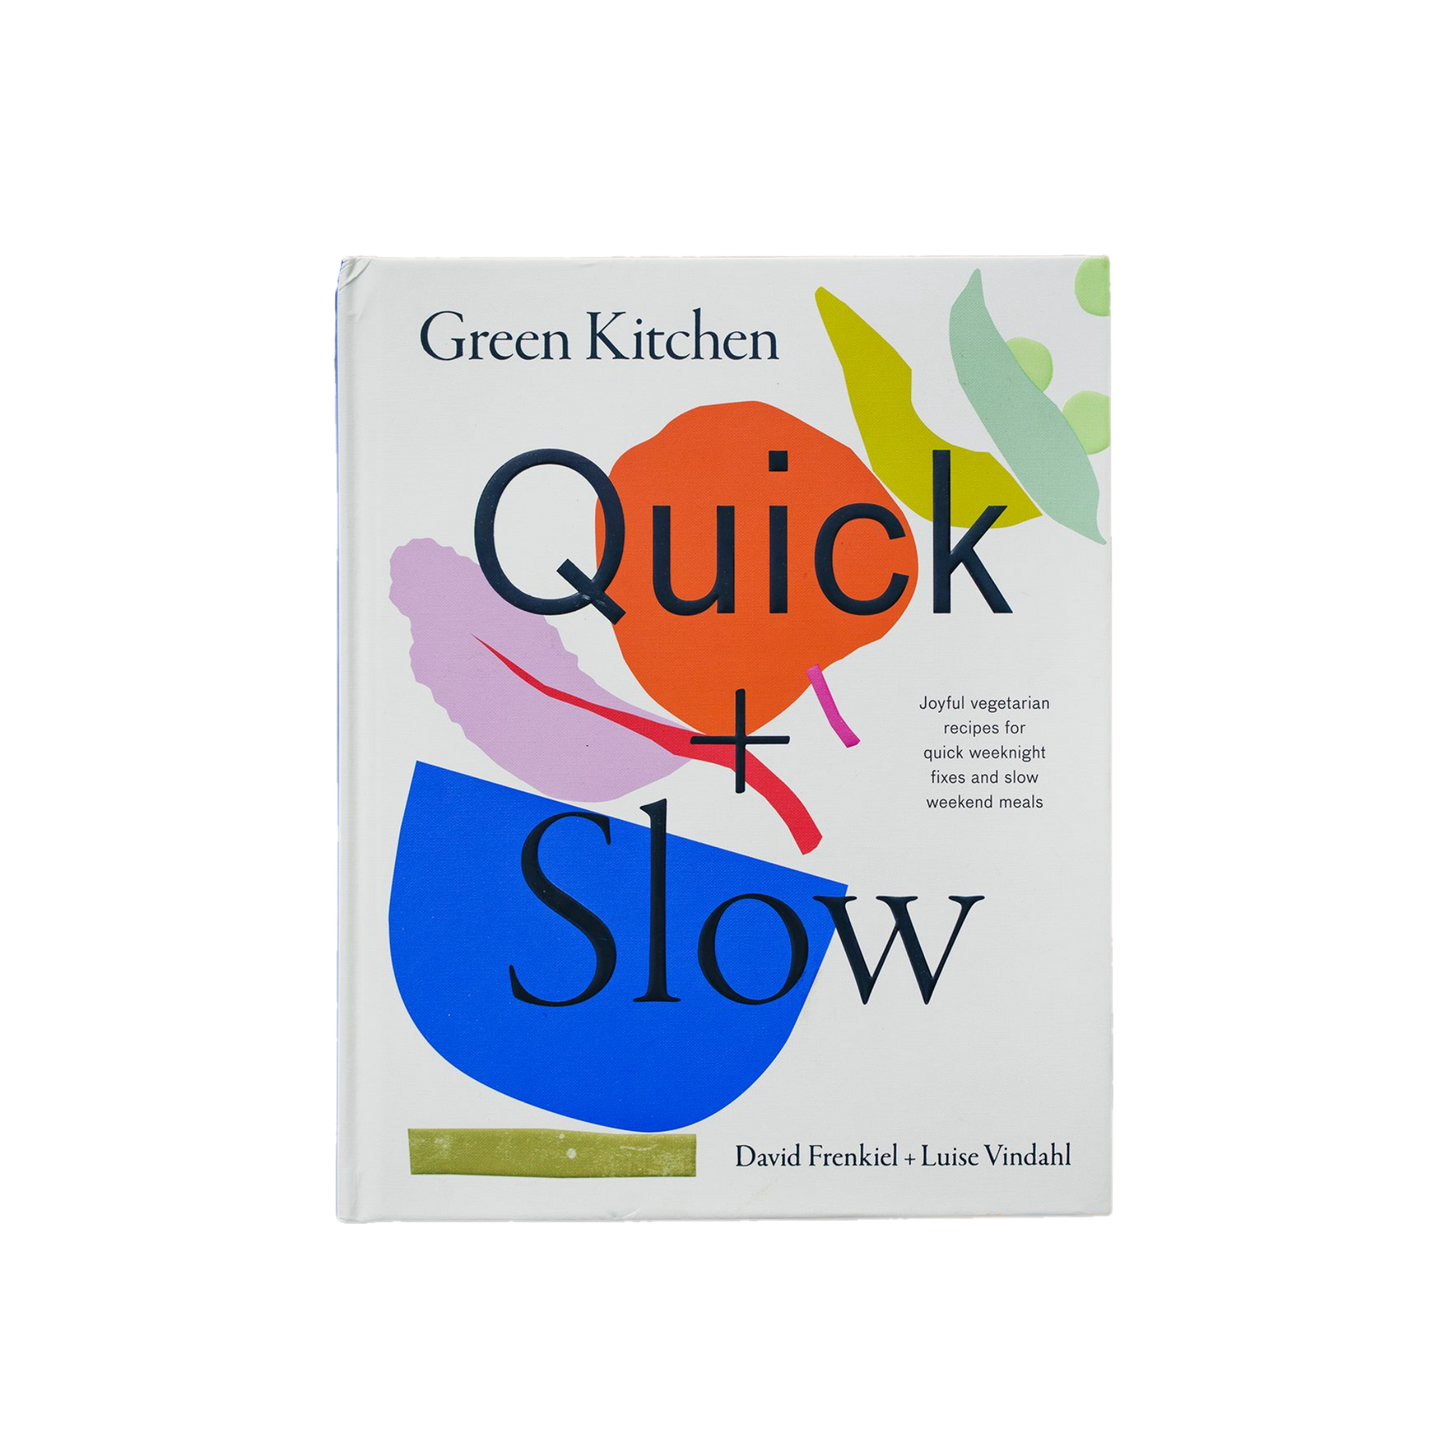 Green Kitchen Quick & Slow